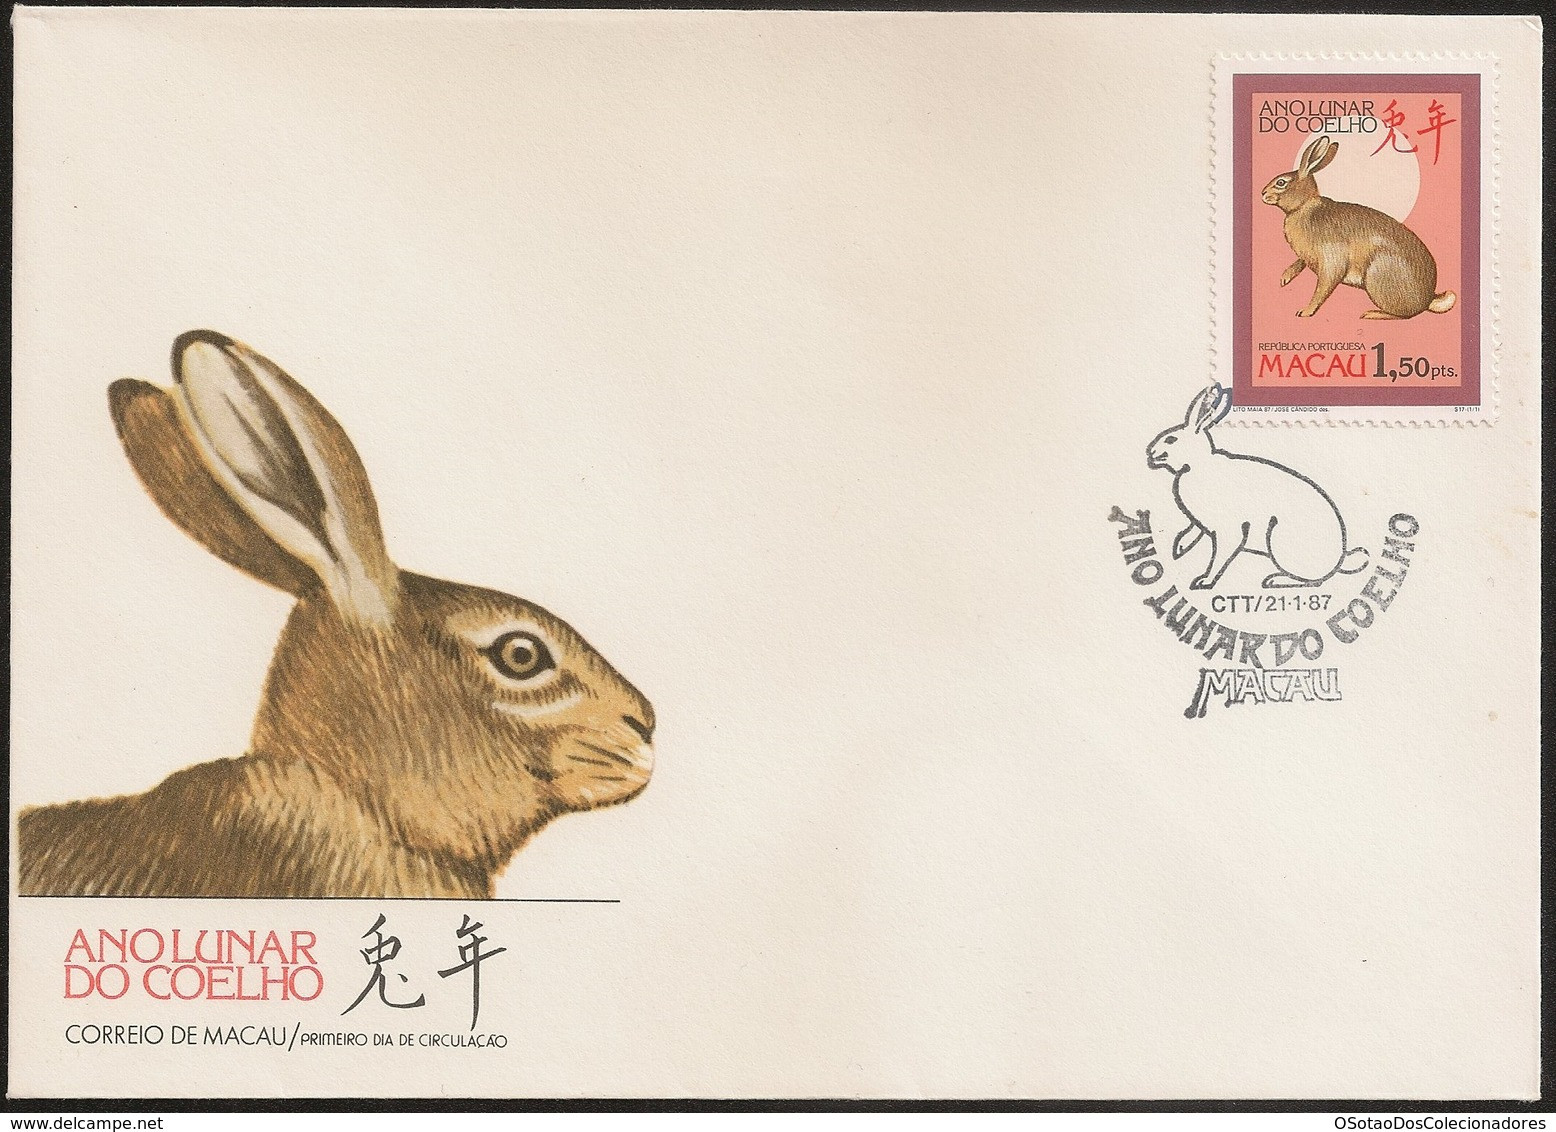 Macau Macao Chine FDC 1987 - Ano Lunar Do Coelho - Chinese New Year - Year Of The Rabbit - MNH/Neuf - FDC